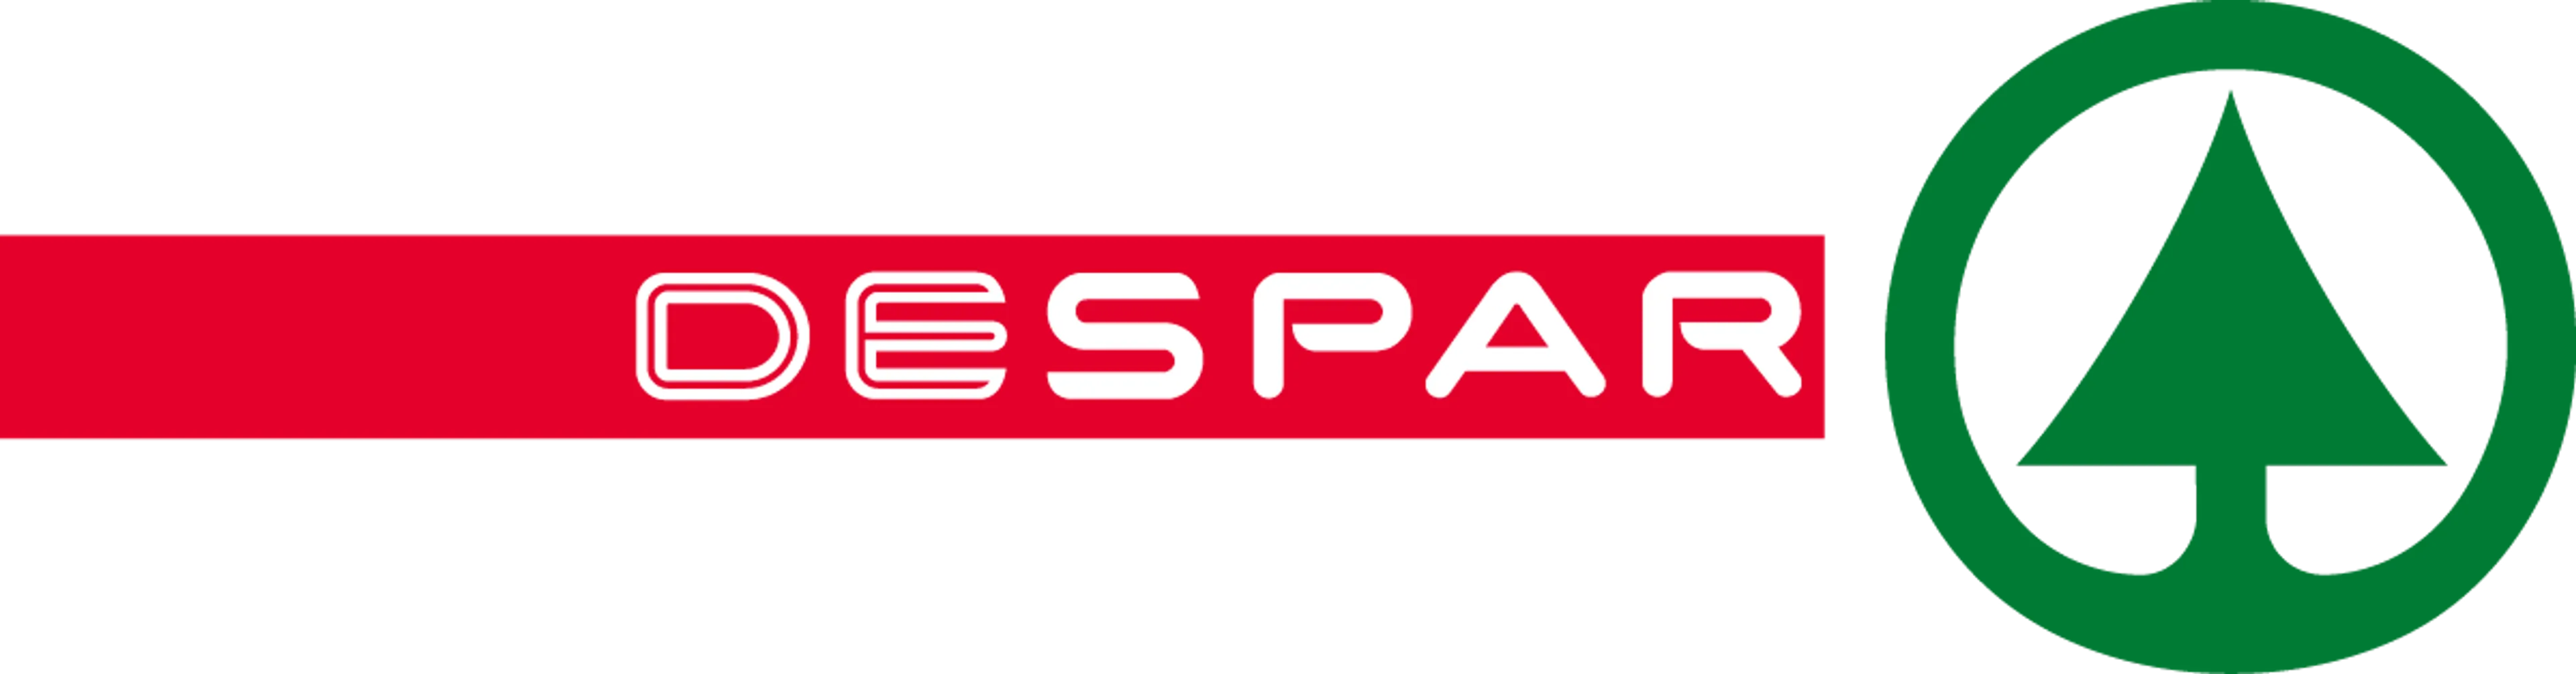 DESPAR logo